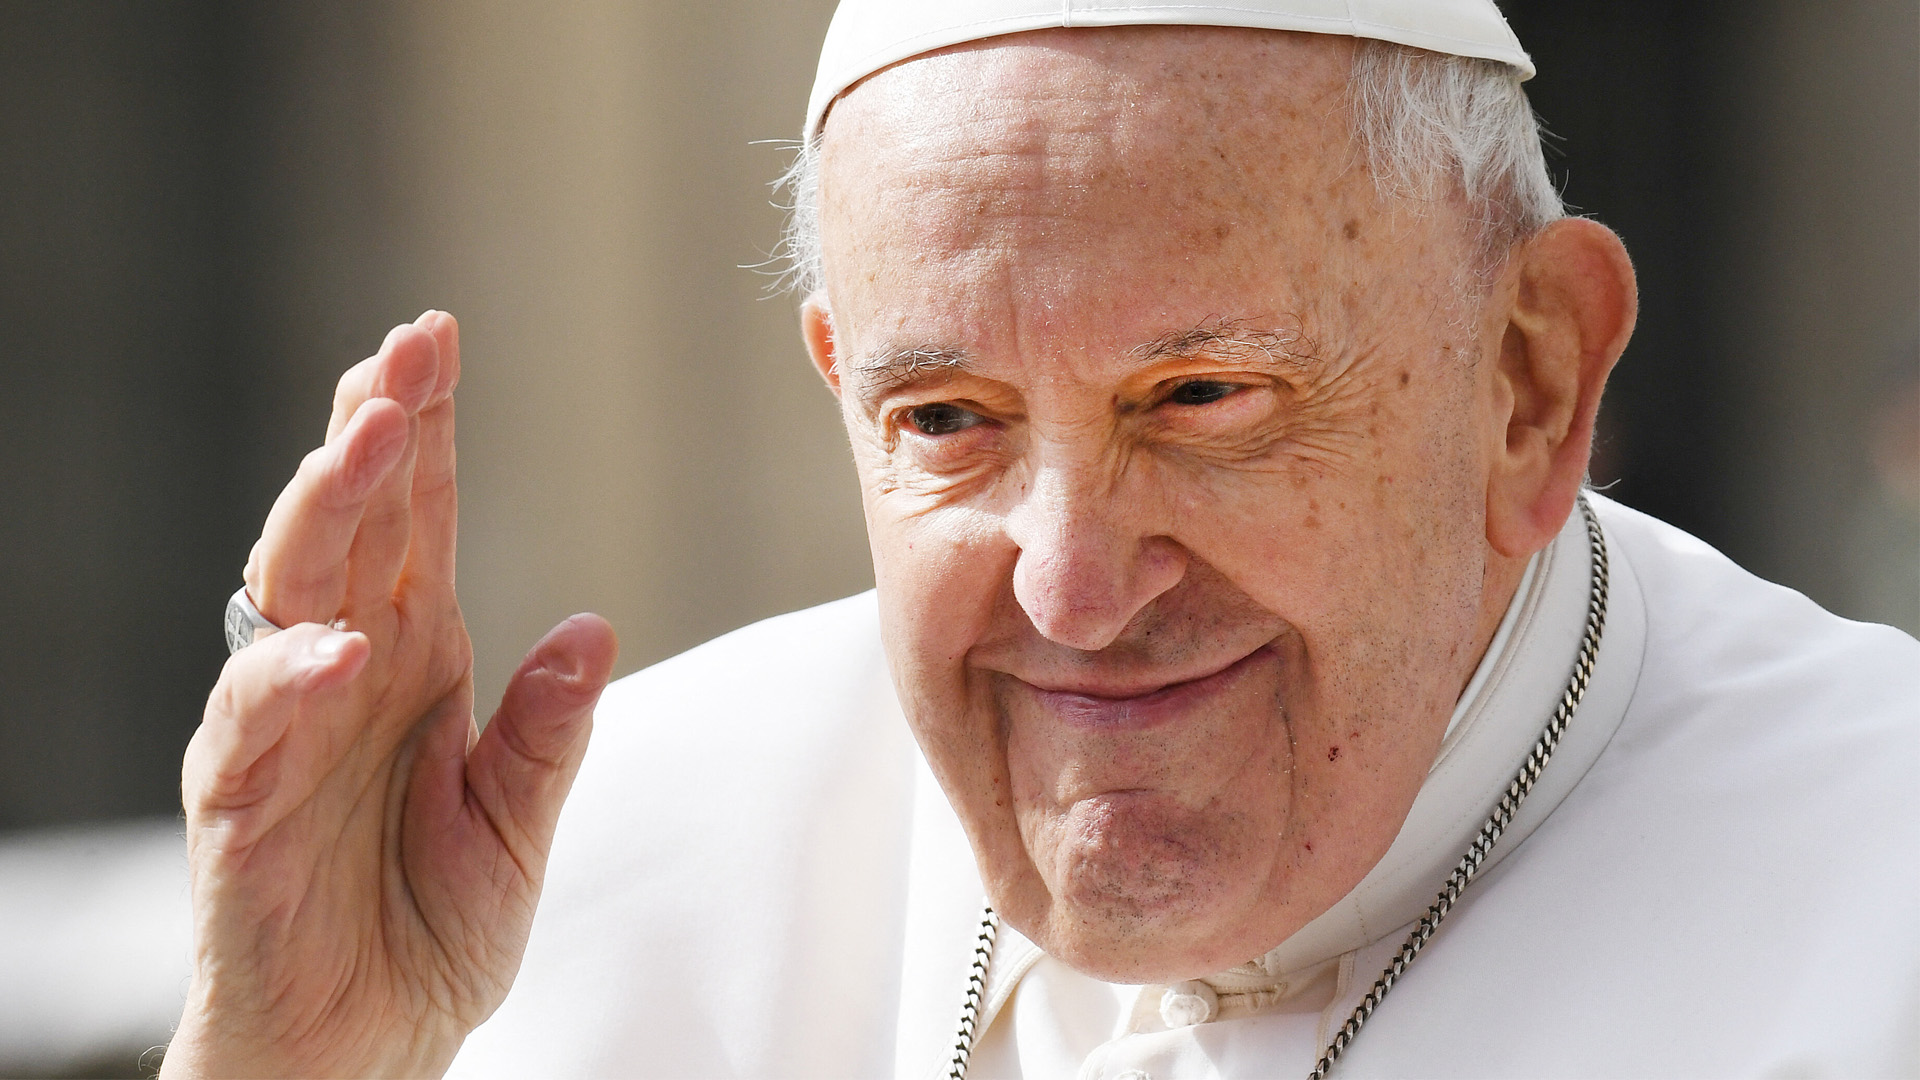 Papa Francisco inicia visita a Portugal. Conheça o programa